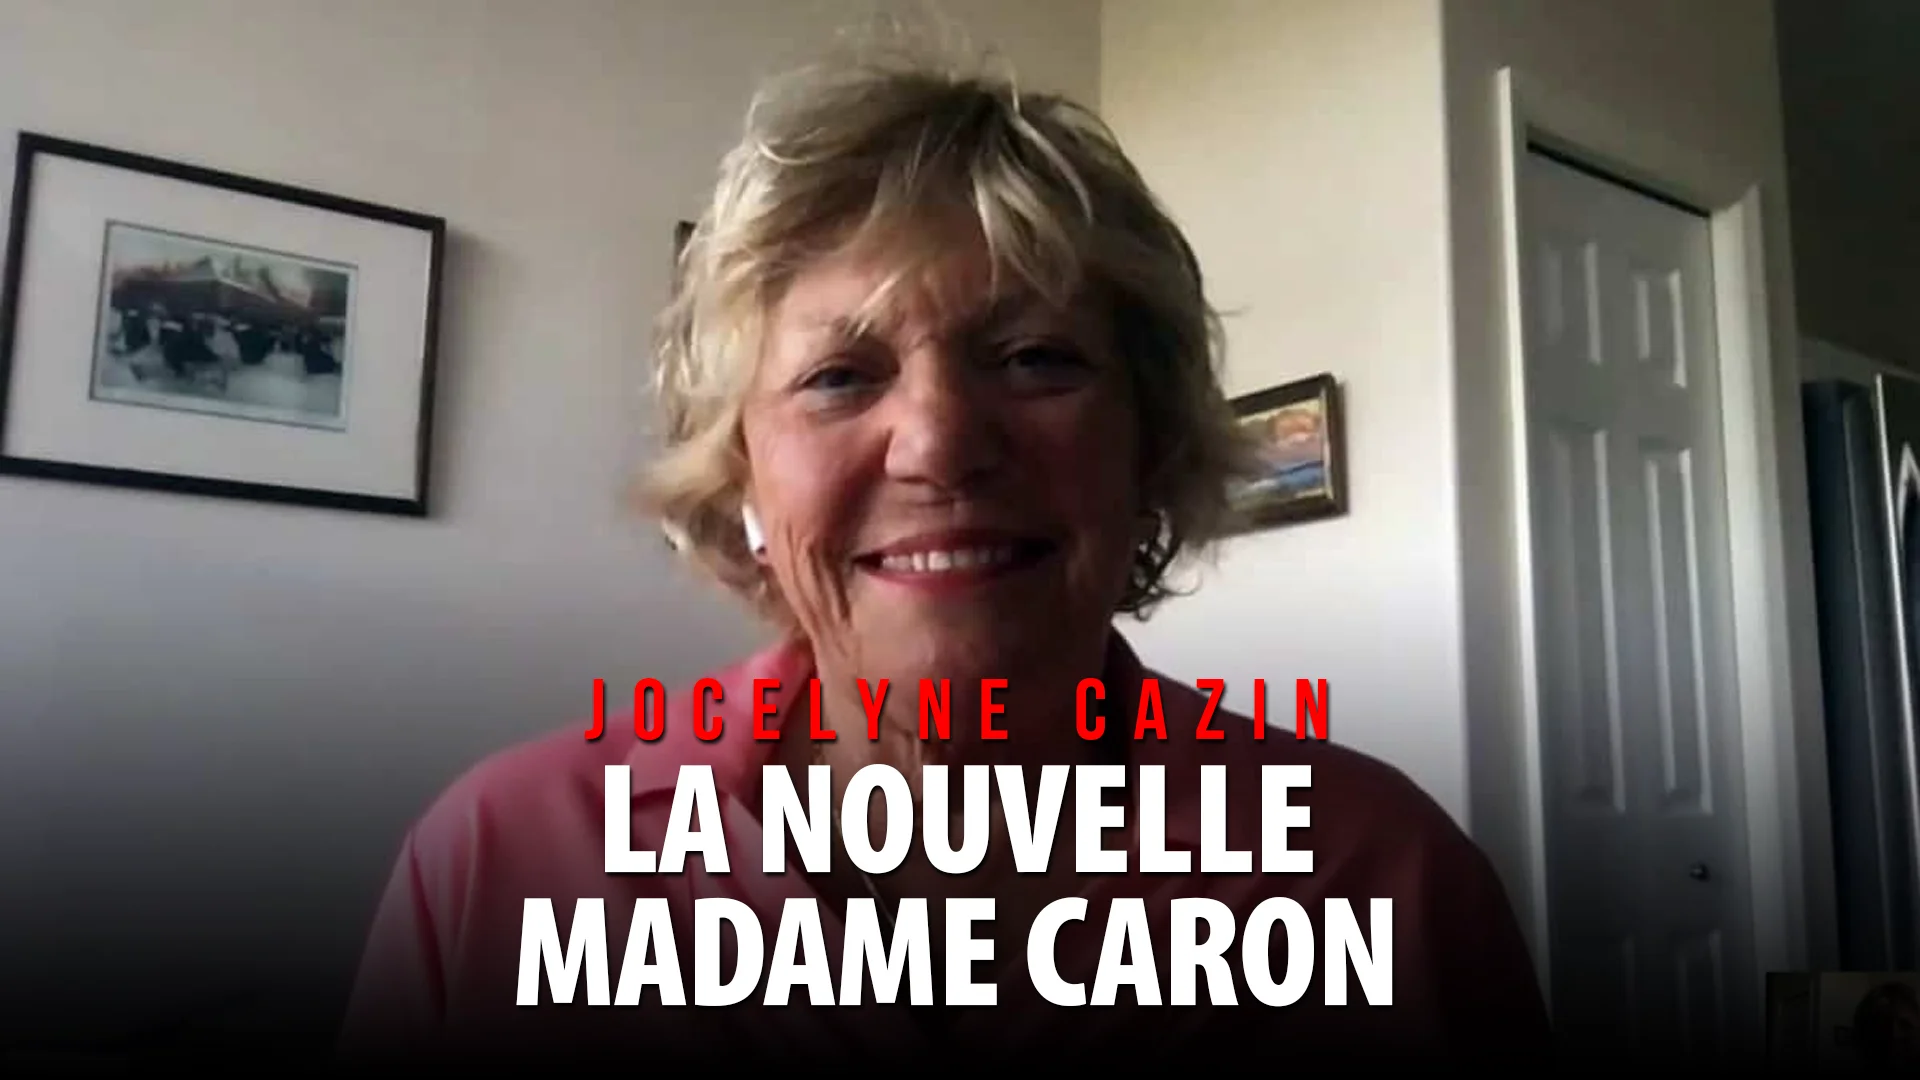 JOCELYNE CAZIN – LA NOUVELLE MADAME CARON